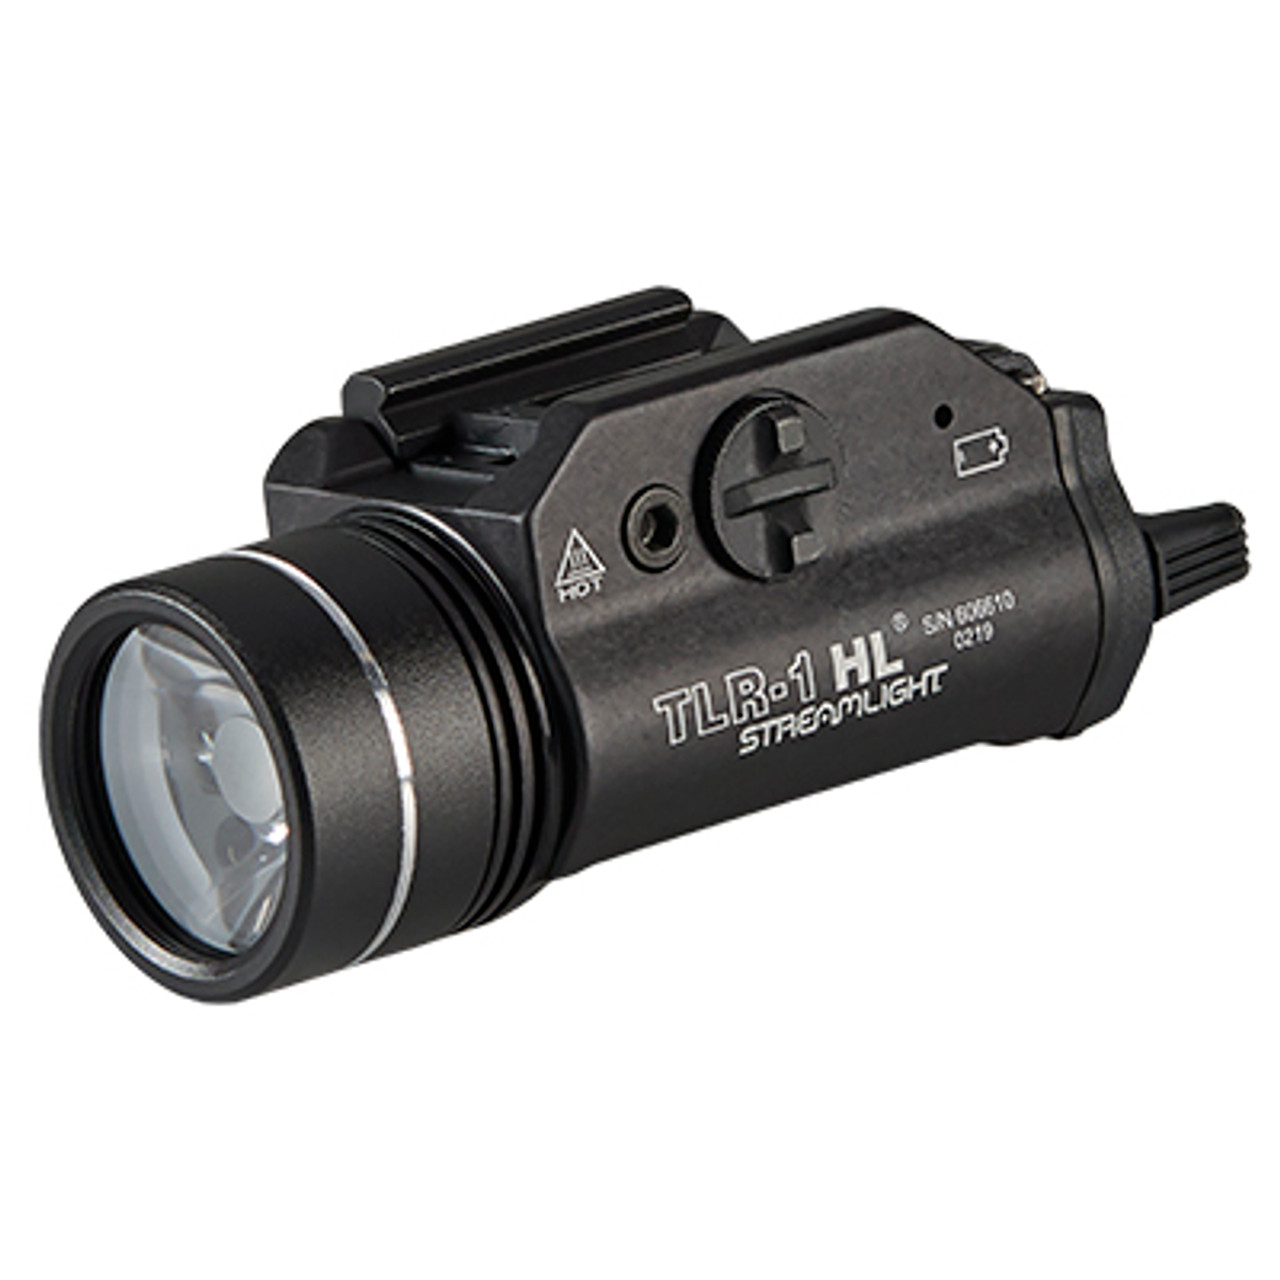 Streamlight Super Bright, 1000 Lumen LED Weapon Light Contour Remote 69300 (Fits 17/